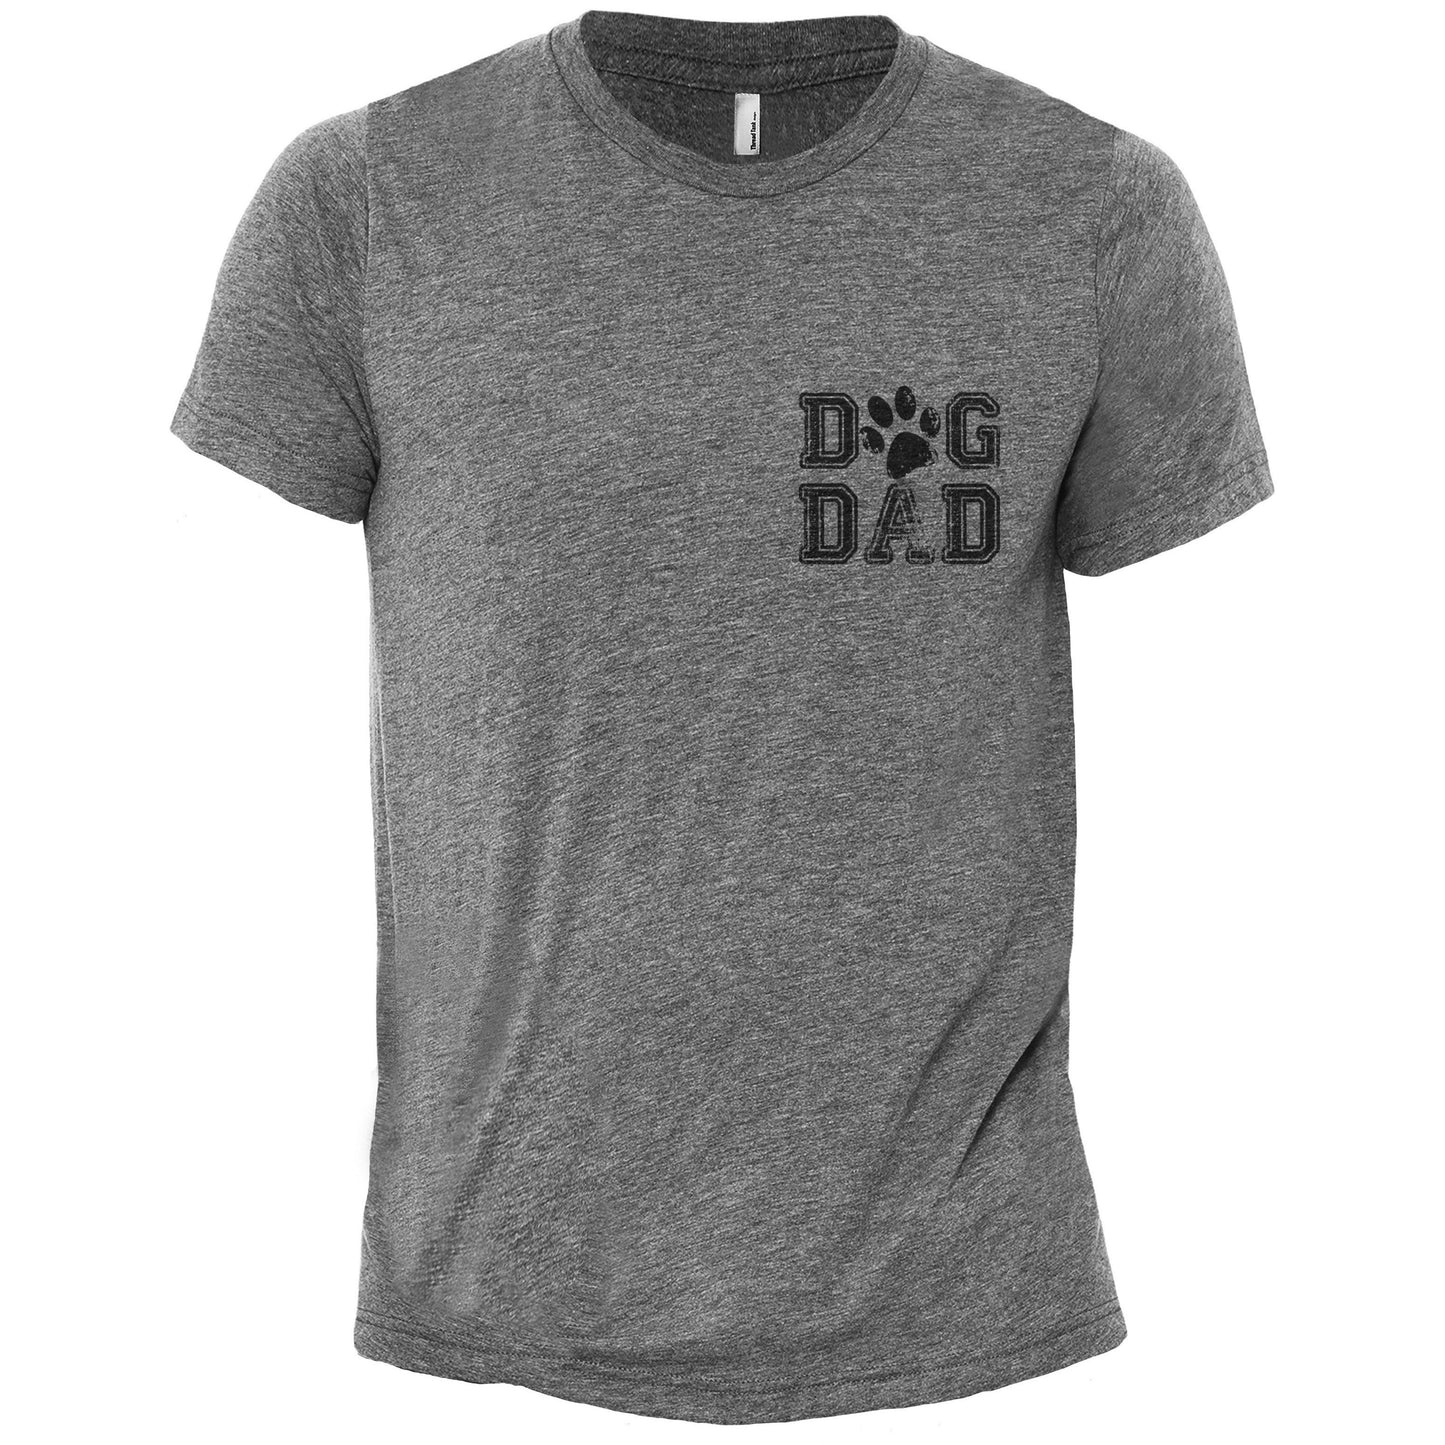 Dog Dad Heather Grey Printed Graphic Men's Crew T-Shirt Tee